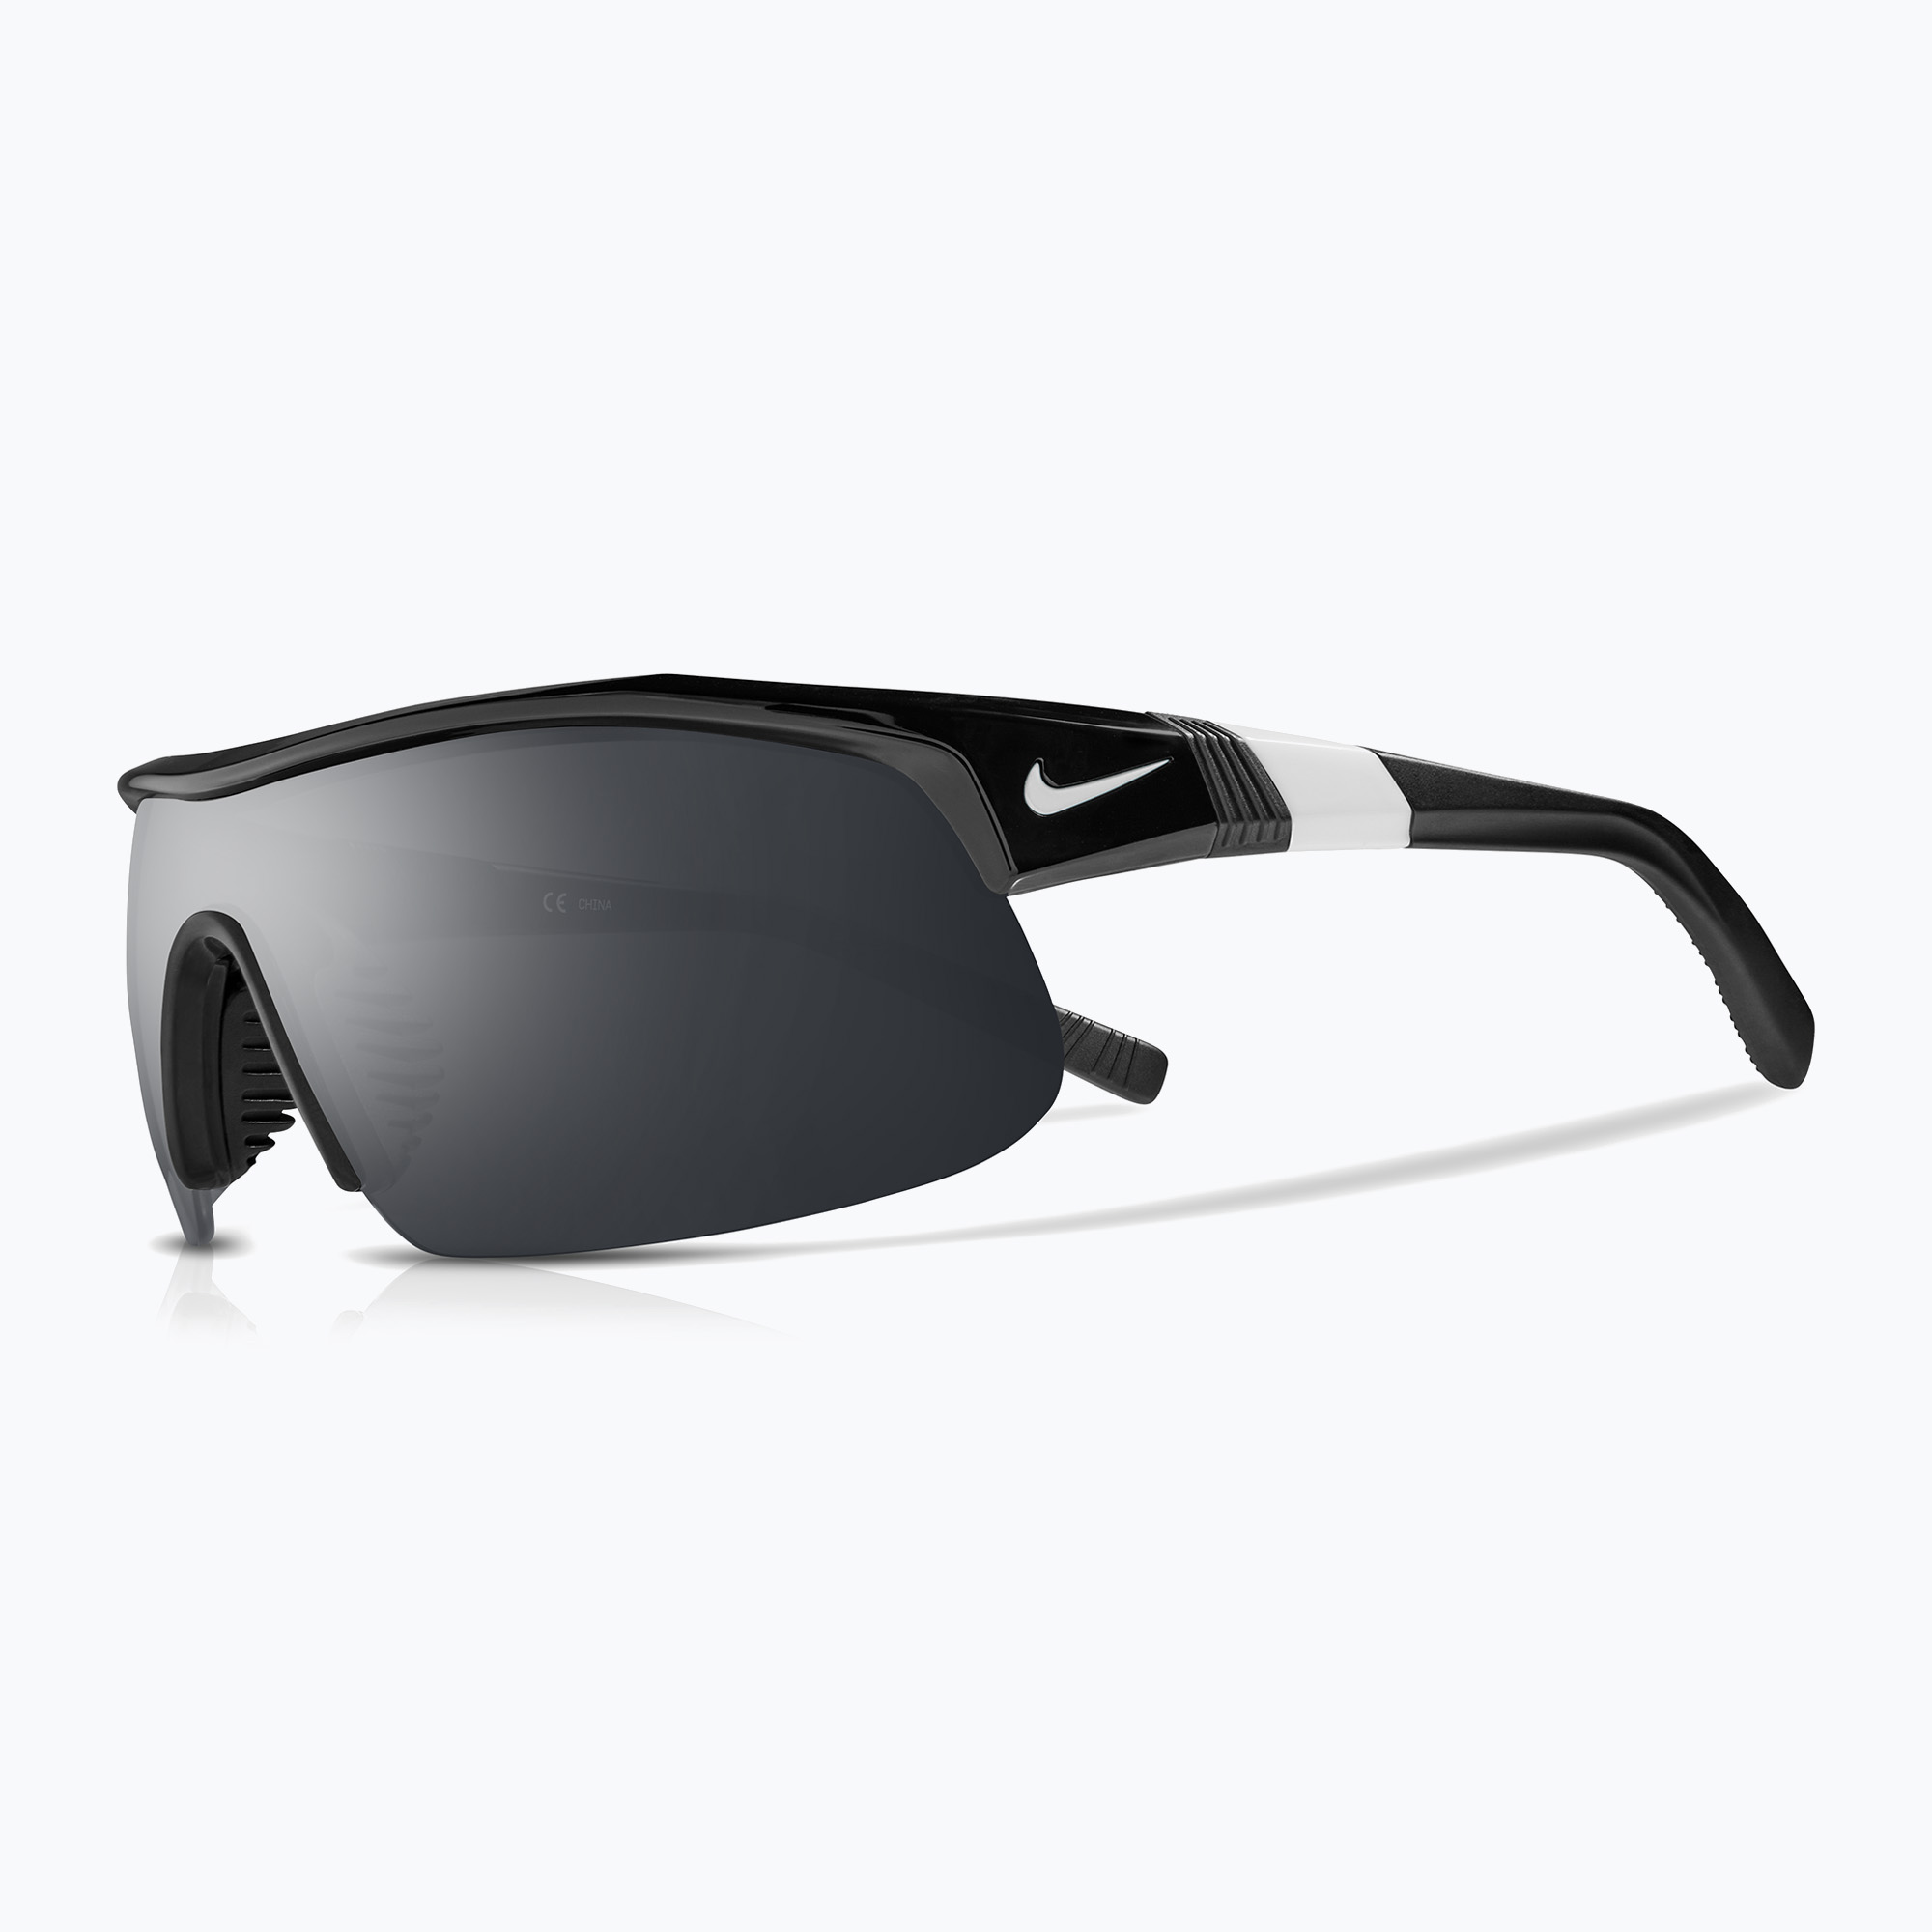 Слънчеви очила Nike Show X1 черни/сребърни светкавици